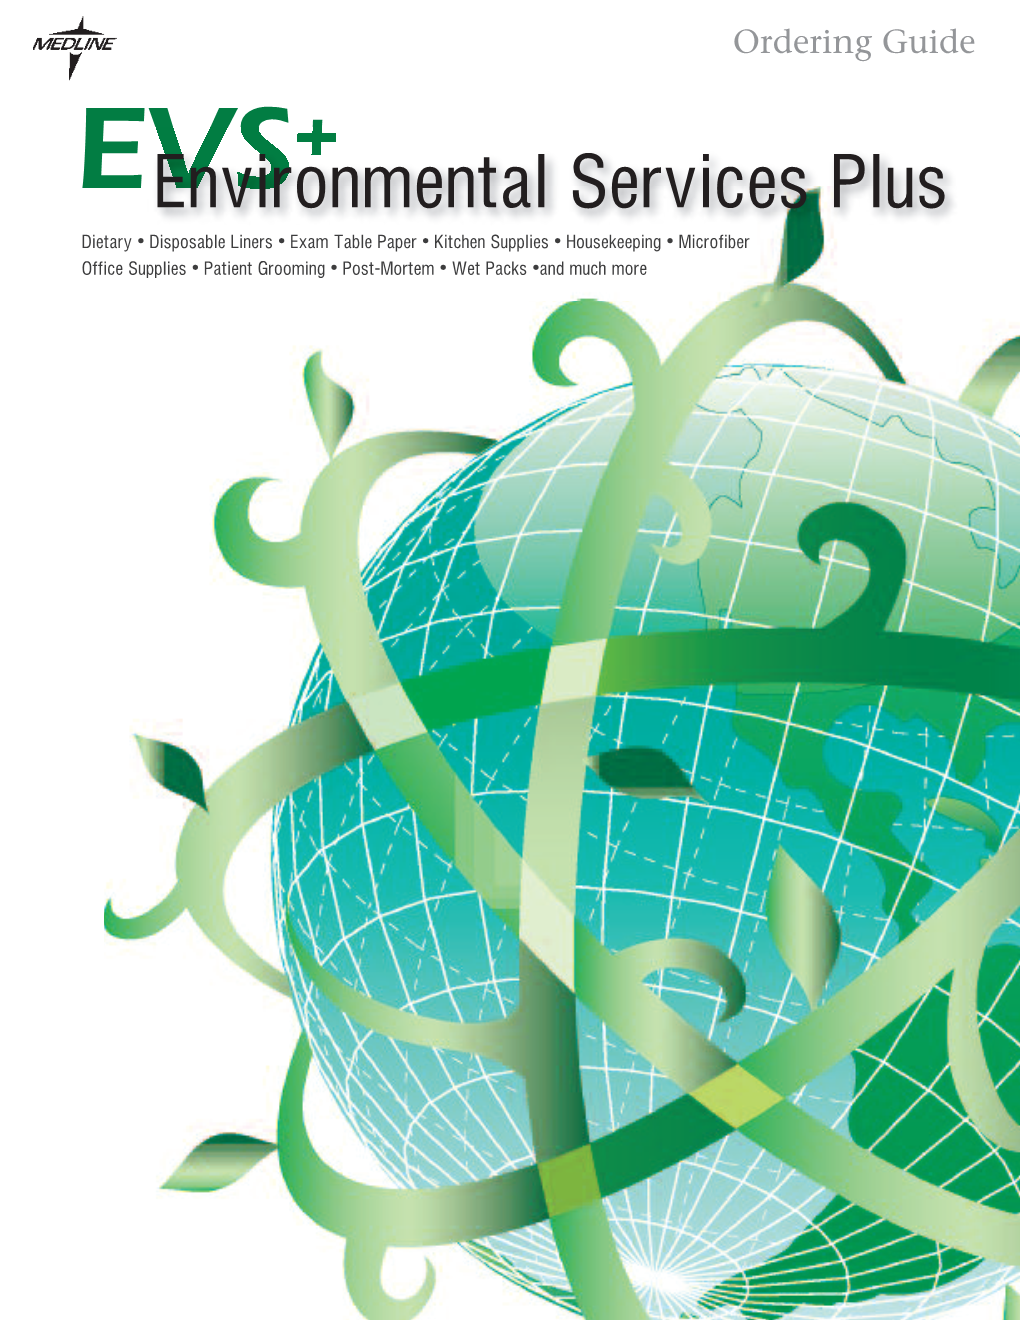 Environmental Services Plus